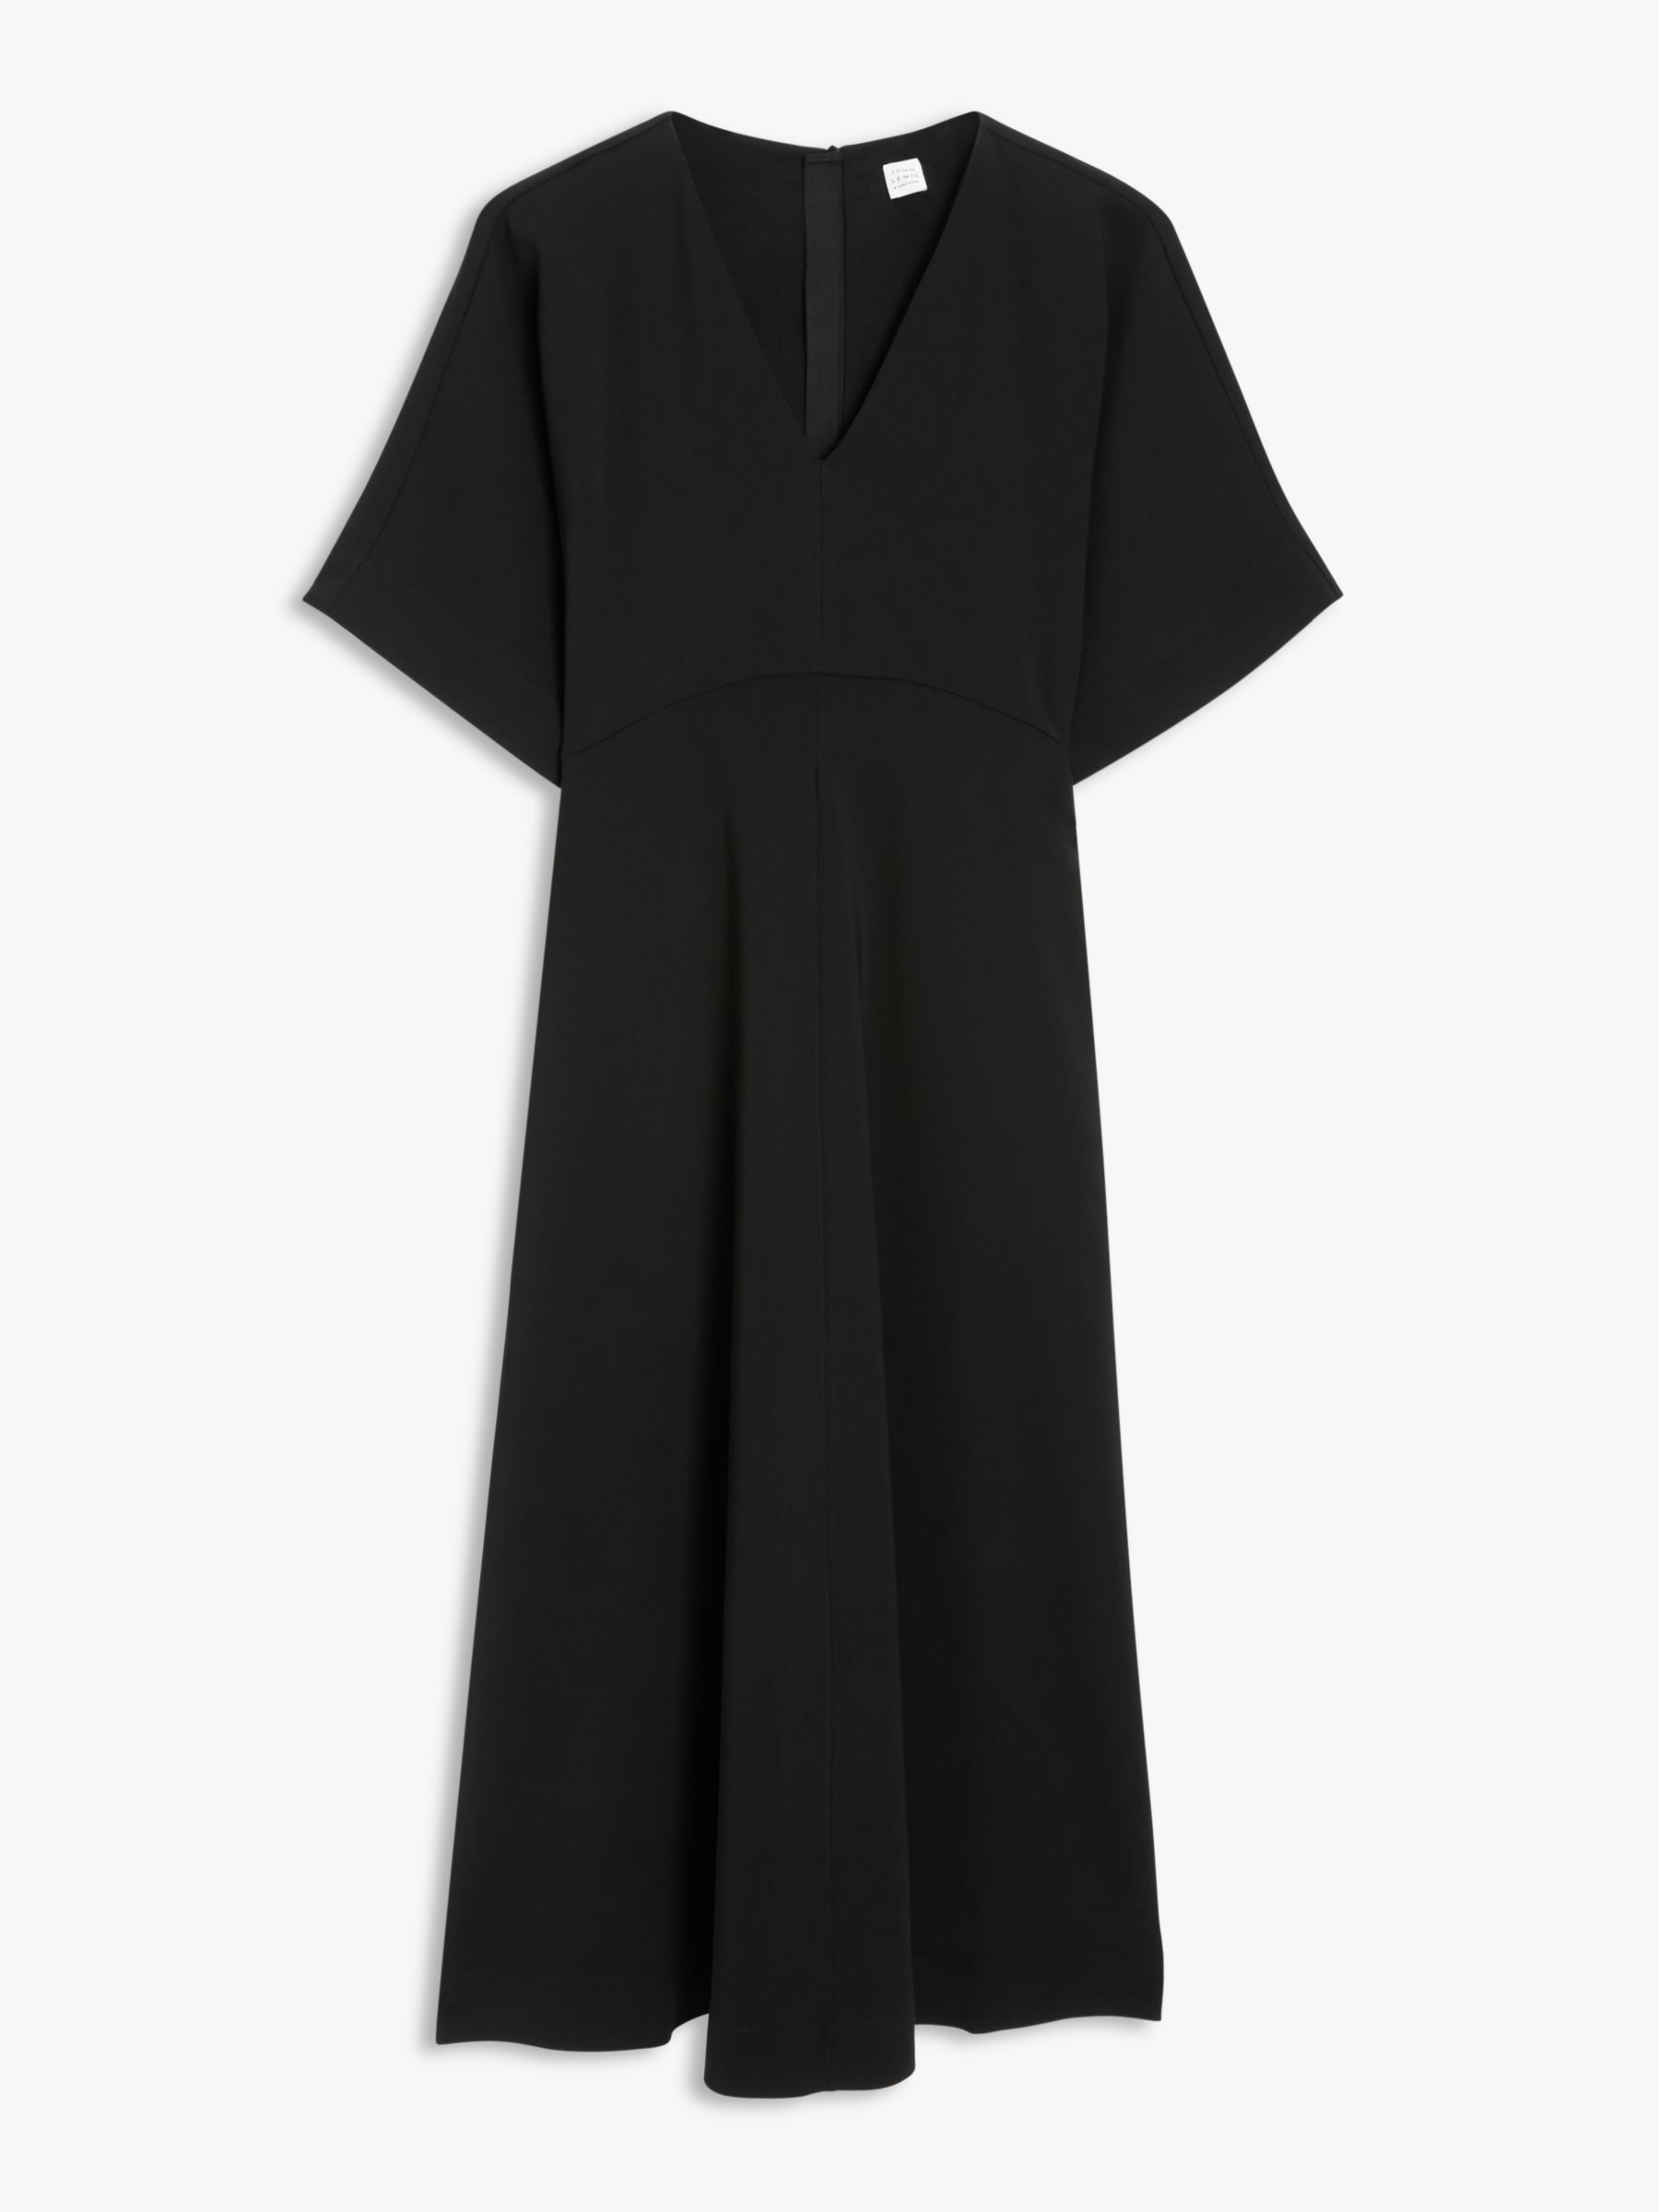 John Lewis V-Neck Dress, Black at John Lewis & Partners